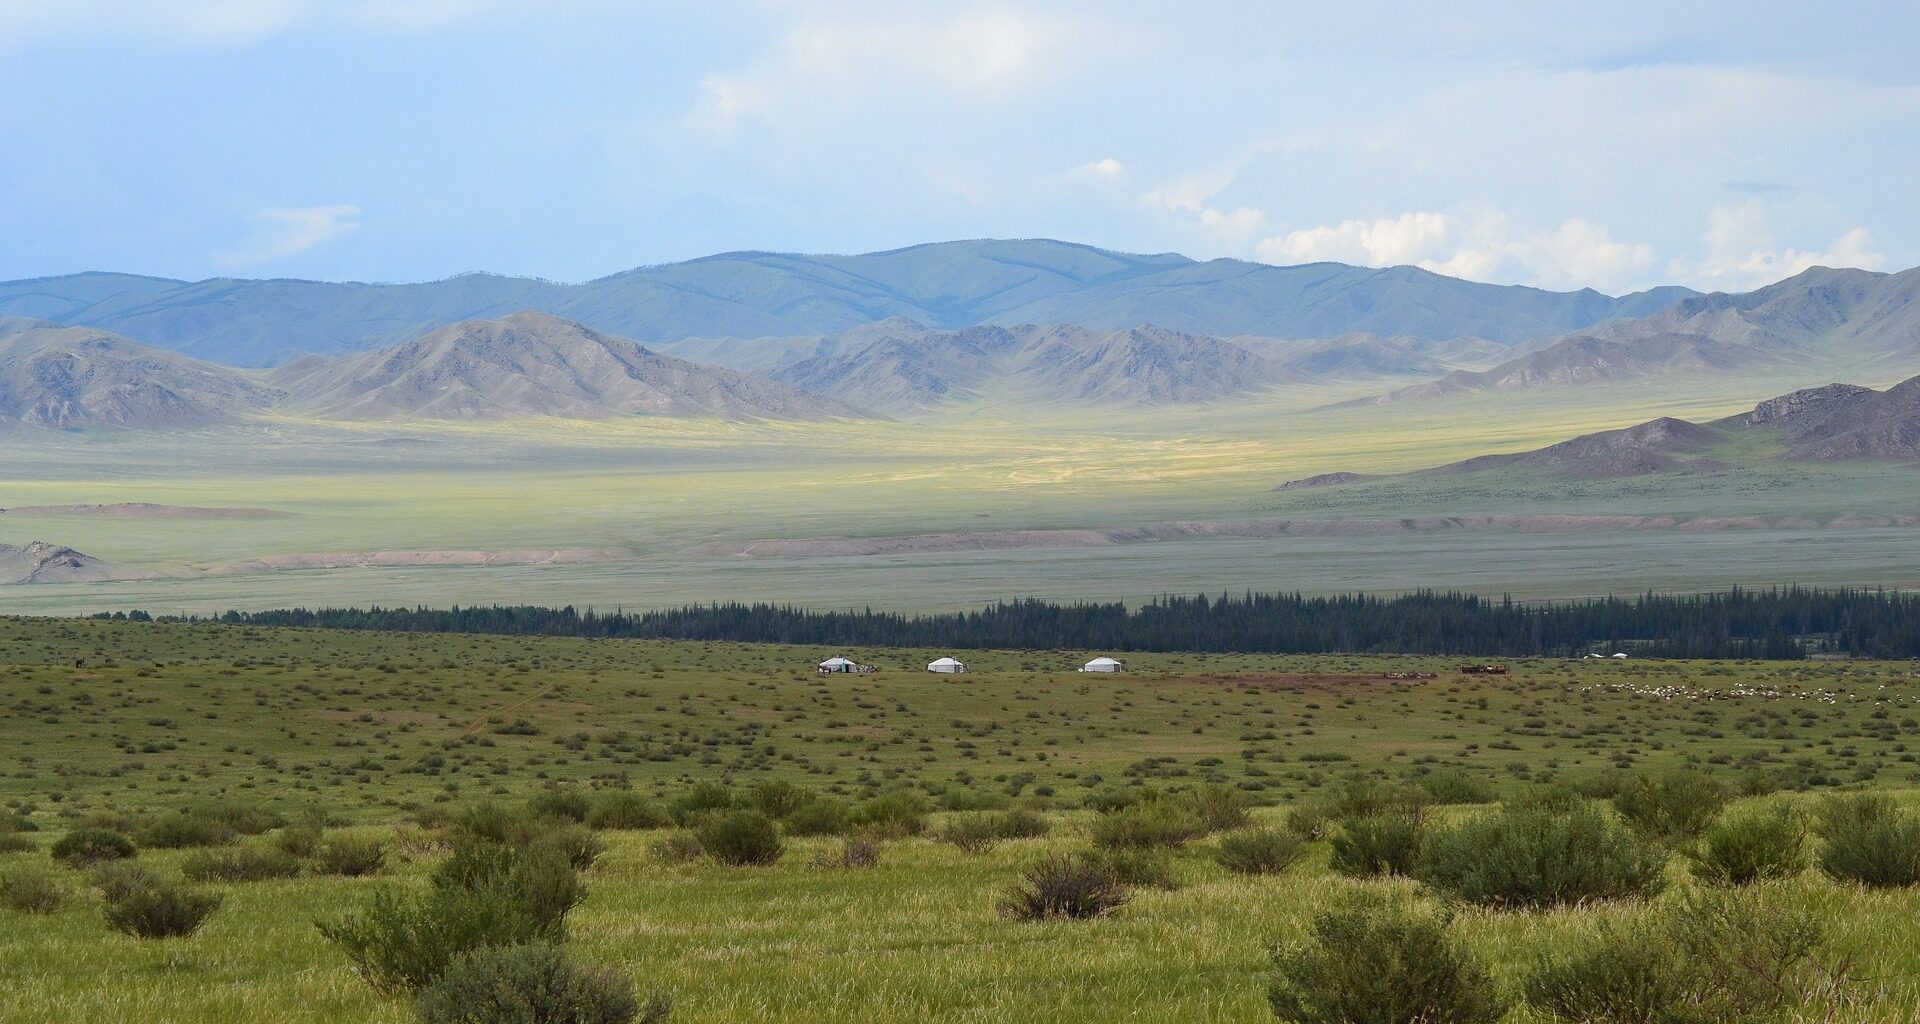 West Mongolian nature